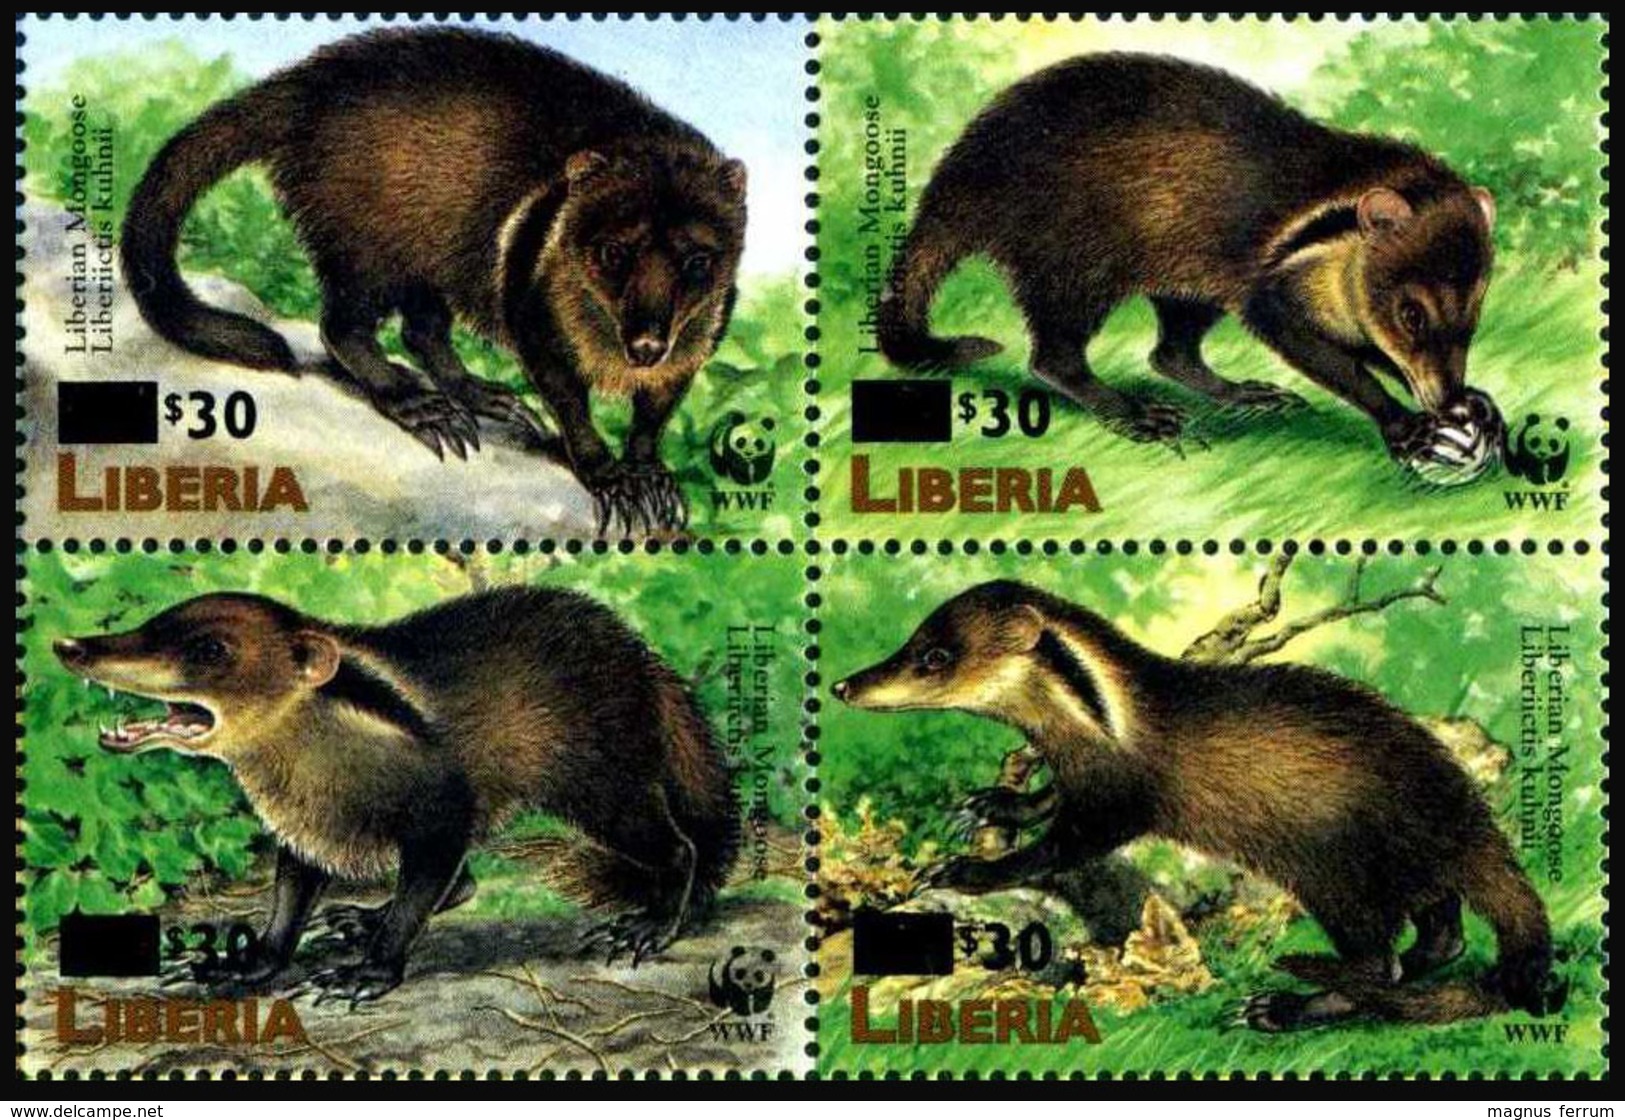 1998 Liberia, Mongoose, WWF, Overprint, 4 Stamps, MNH - Unused Stamps